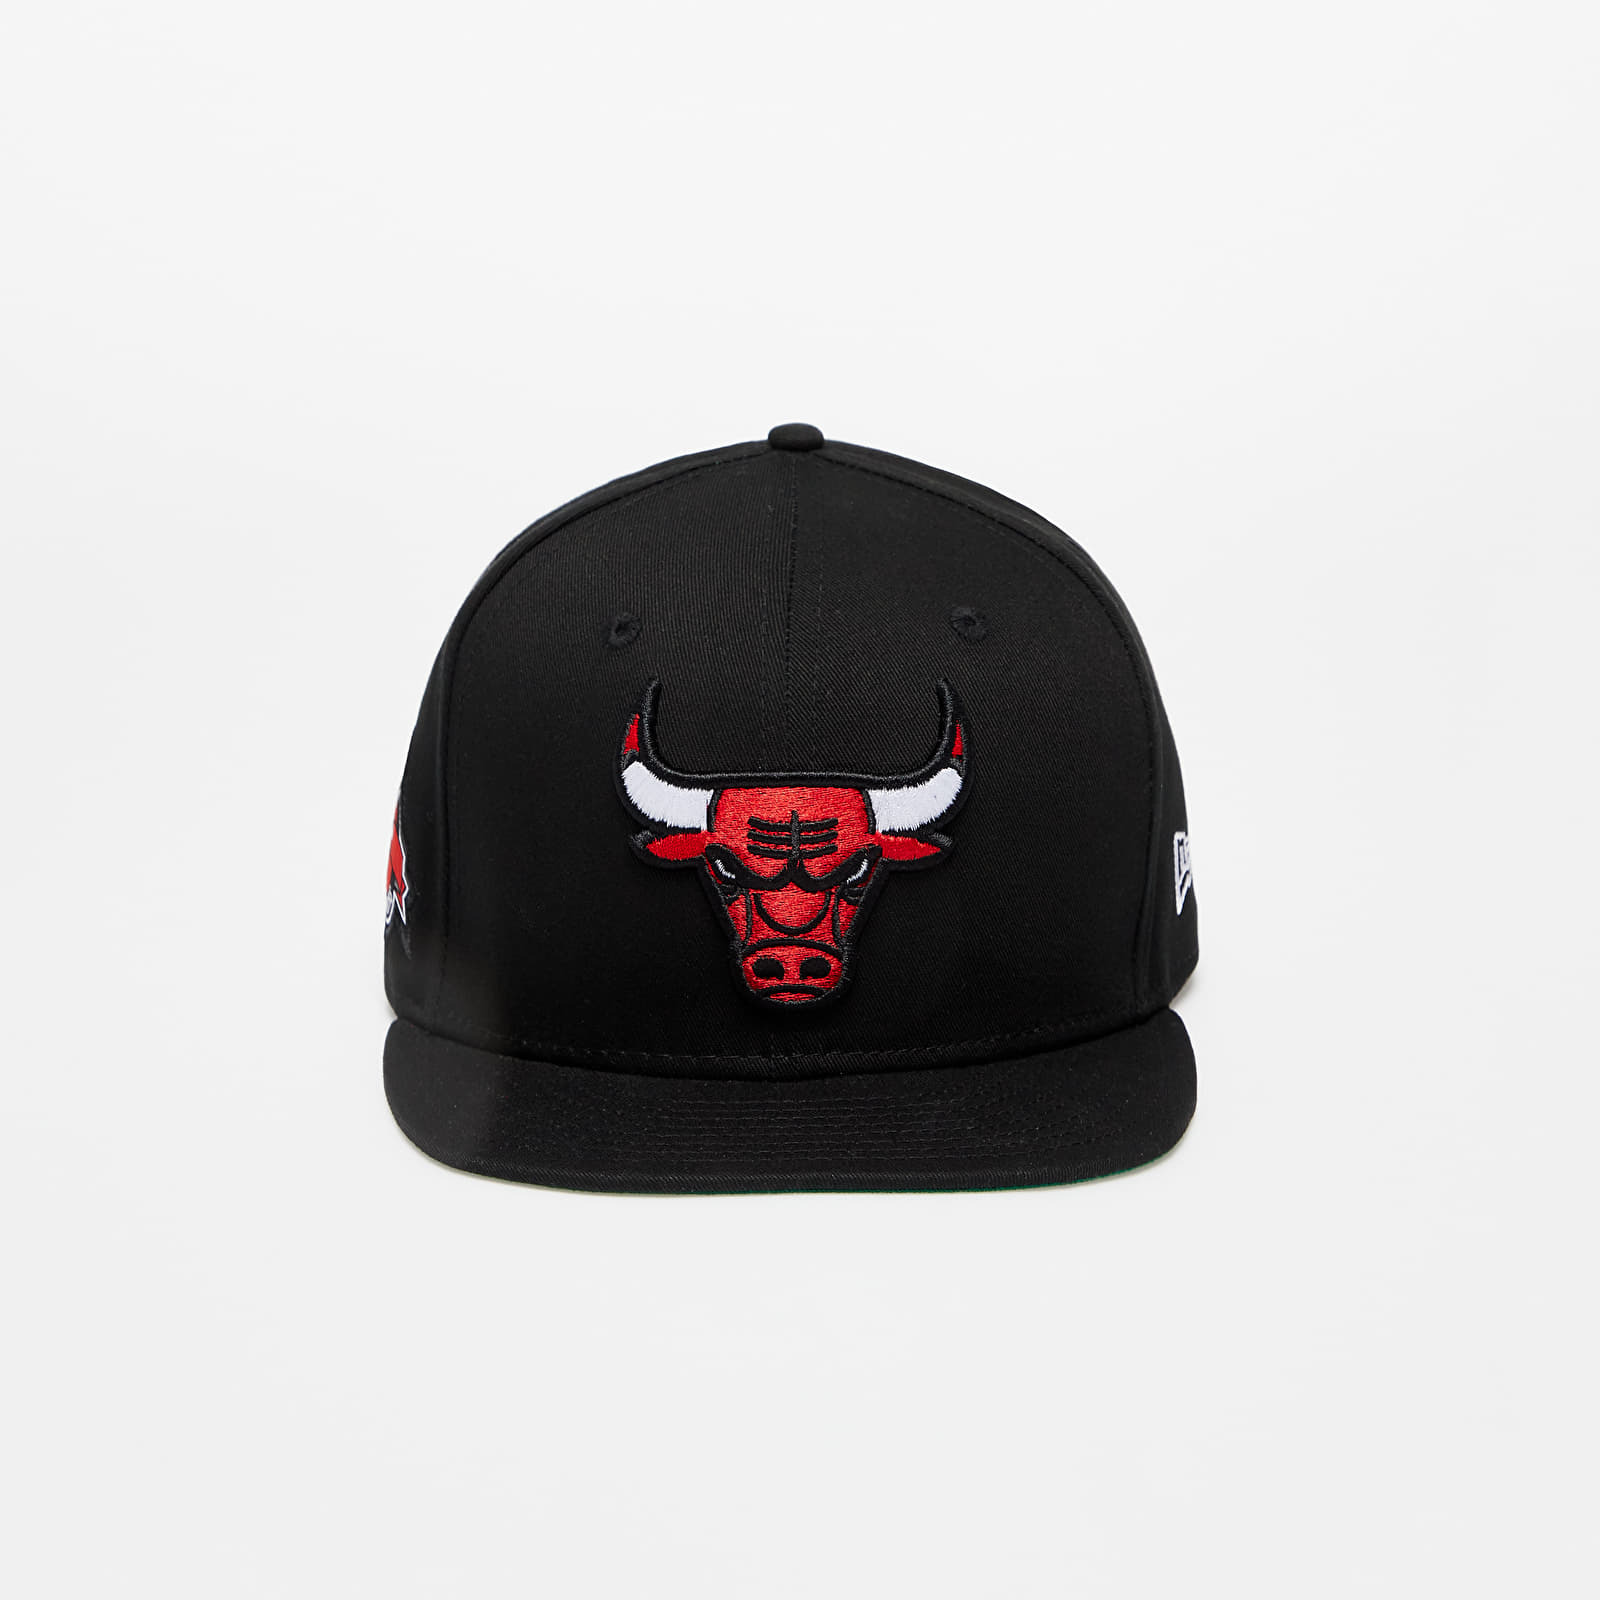 New Era - chicago bulls team side patch 9fifty snapback cap black